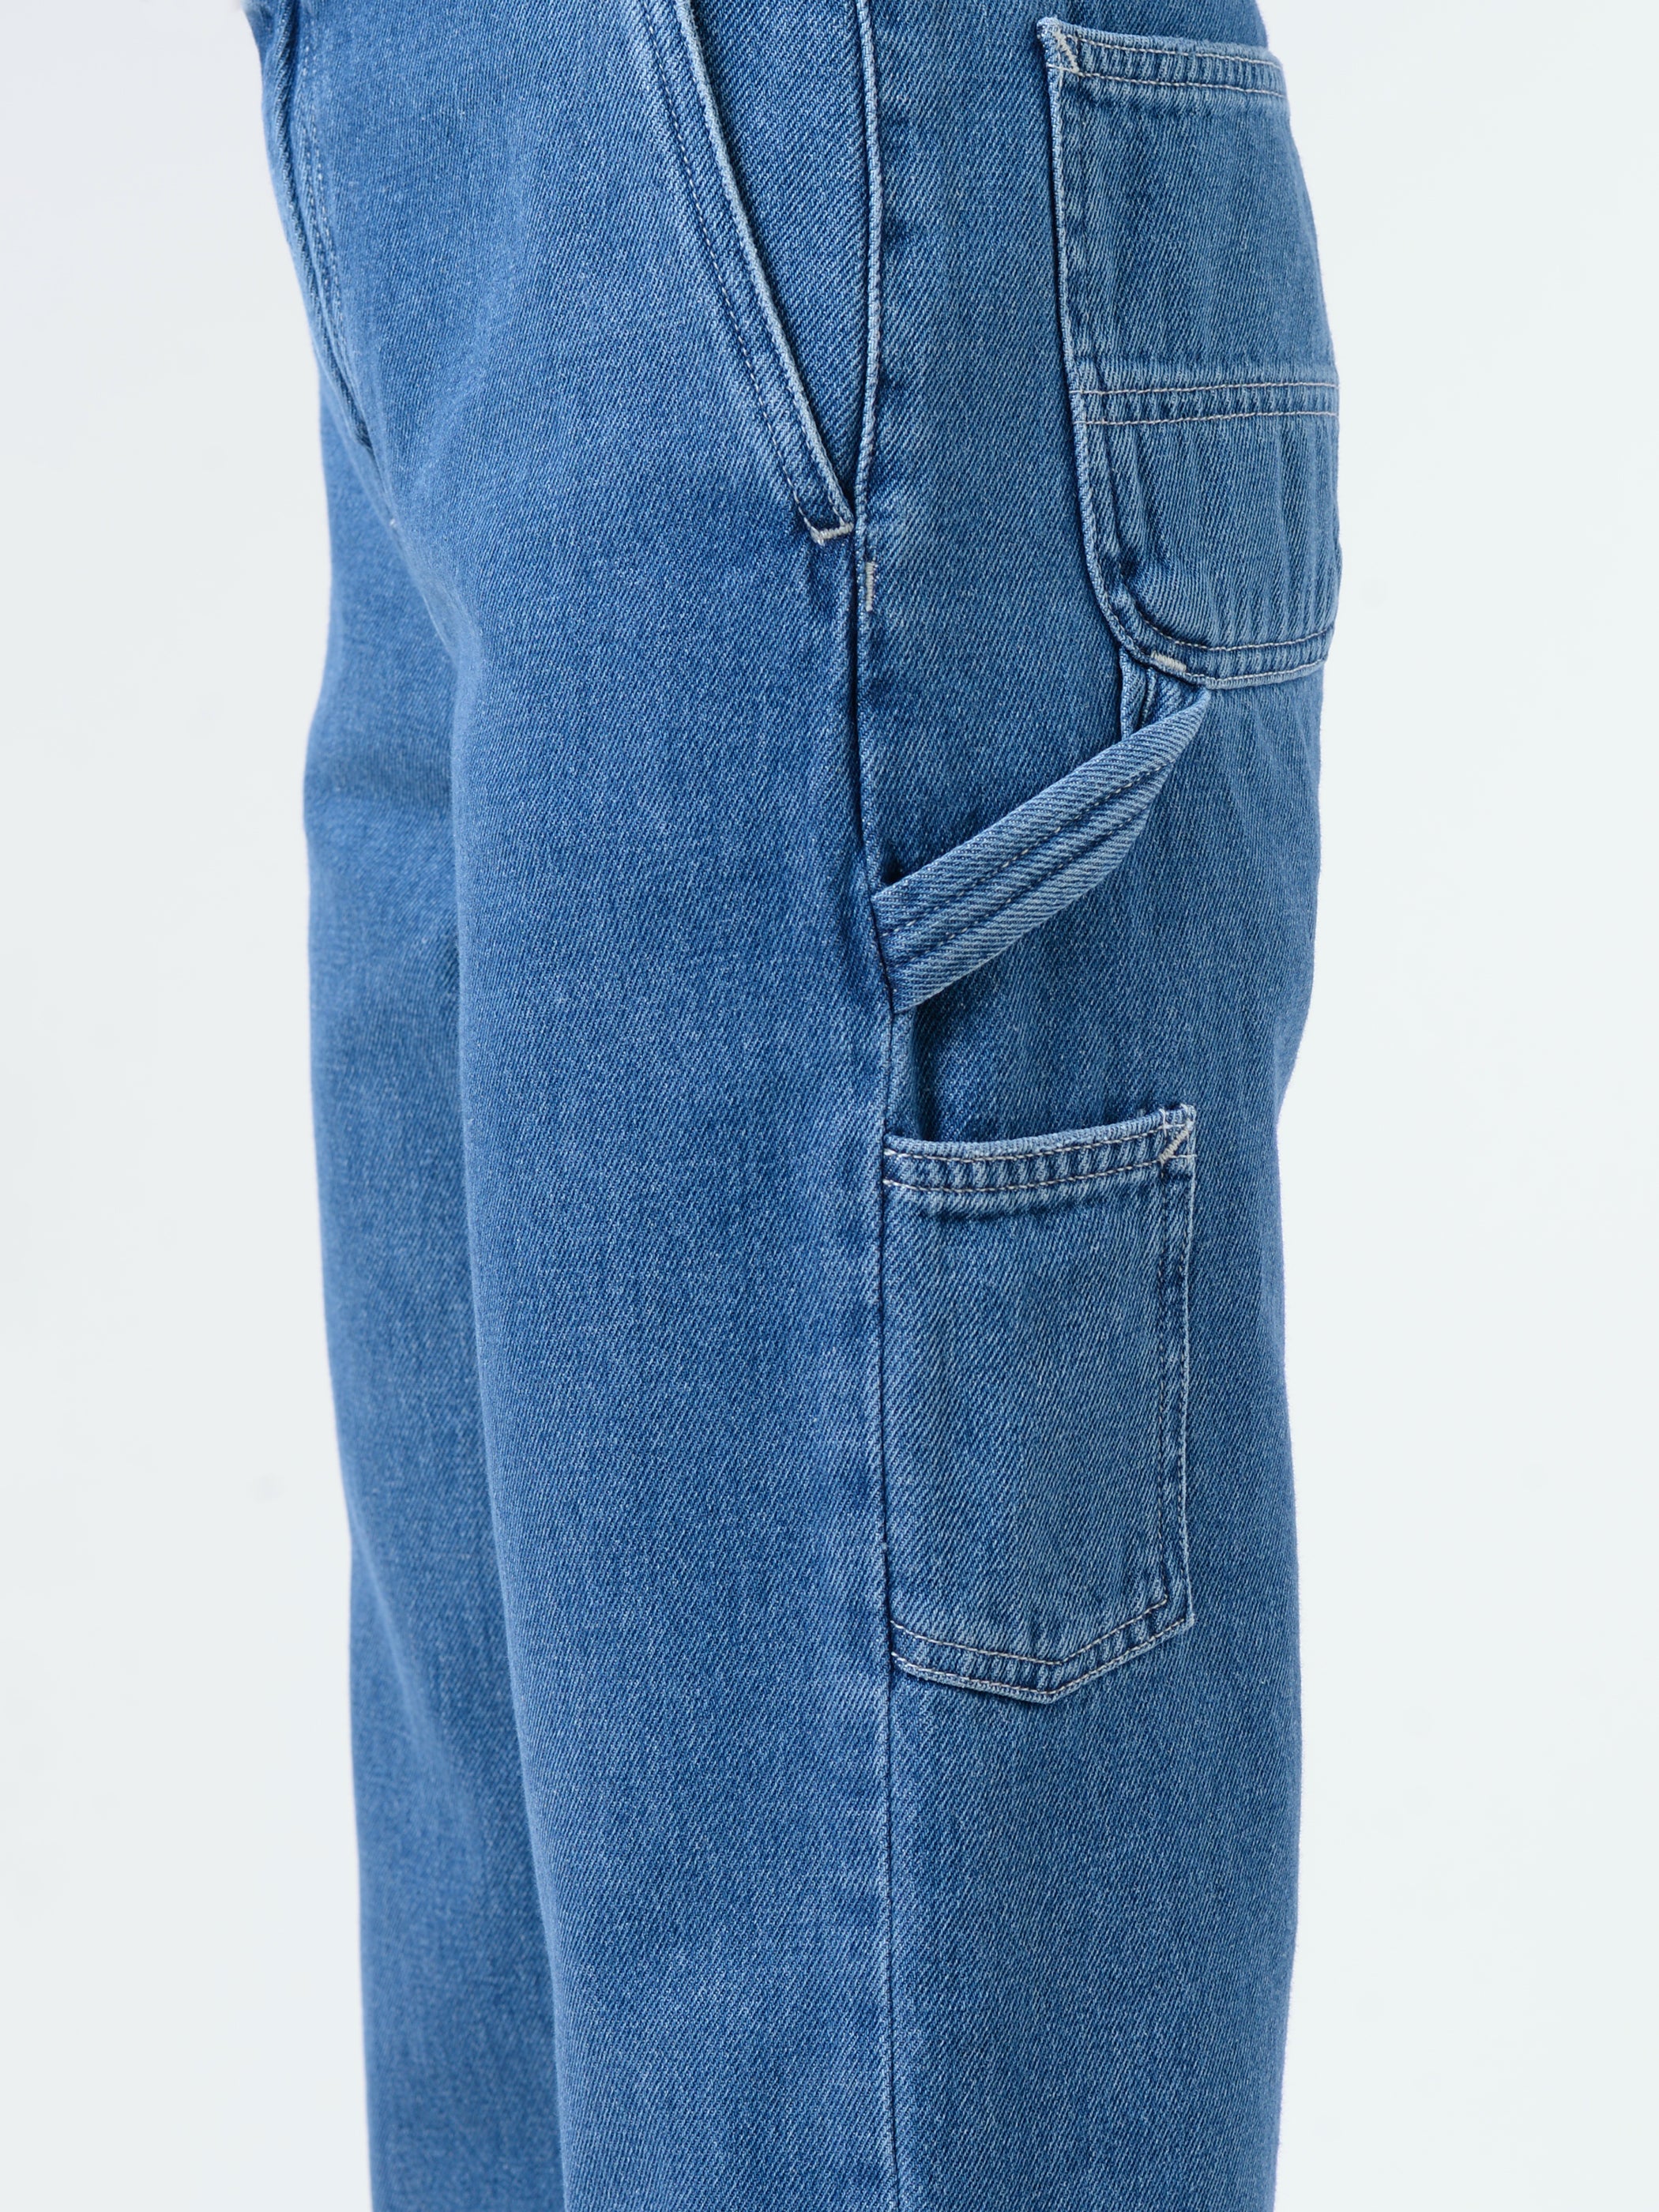 Shop Carhartt WIP W' Pierce Pant Maverick Jeans women (blue light